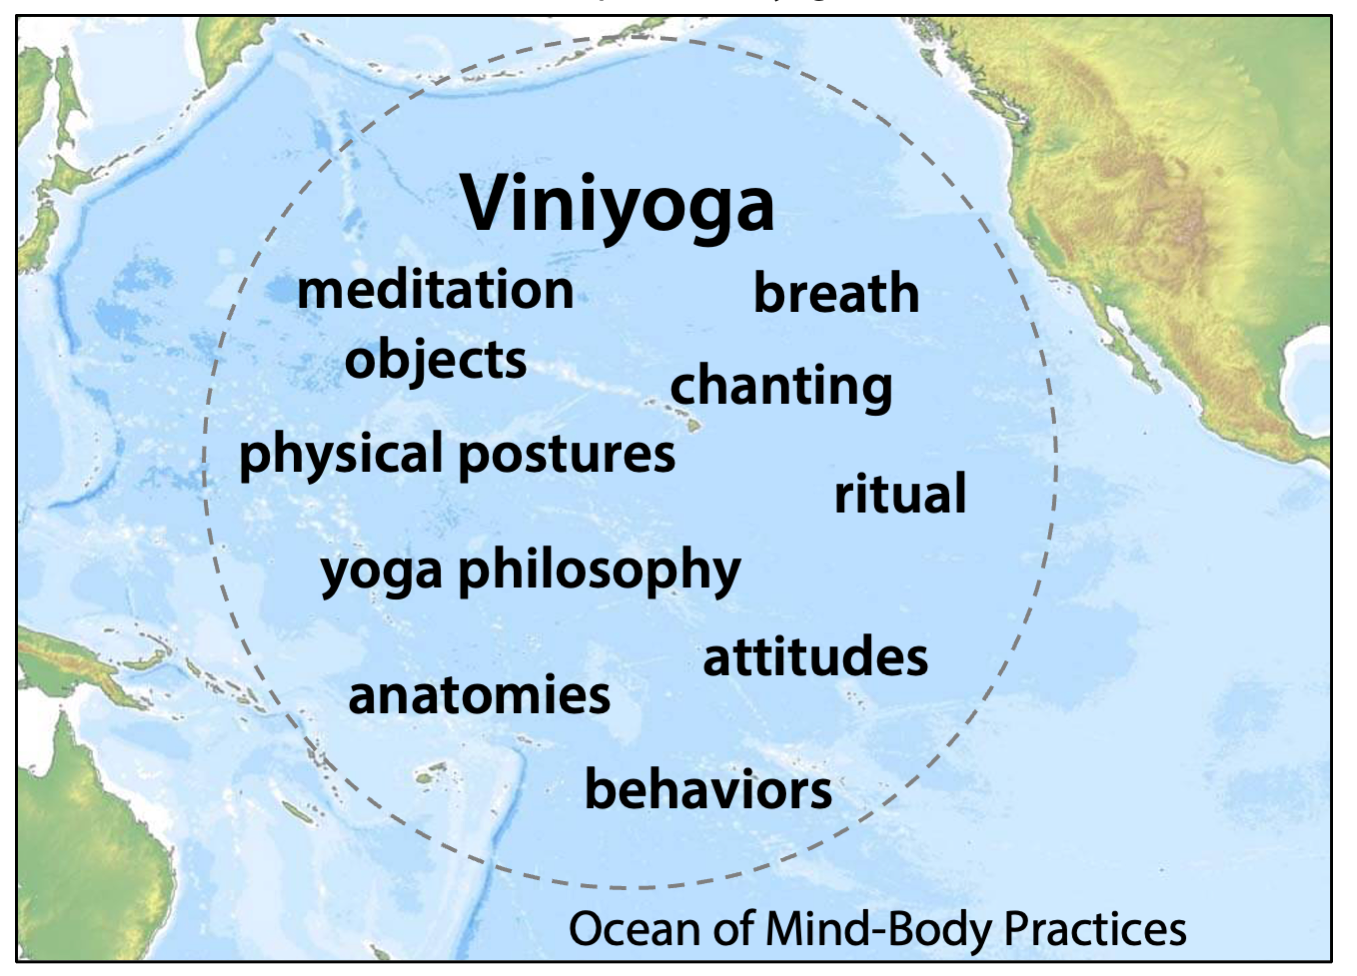 elements of viniyoga